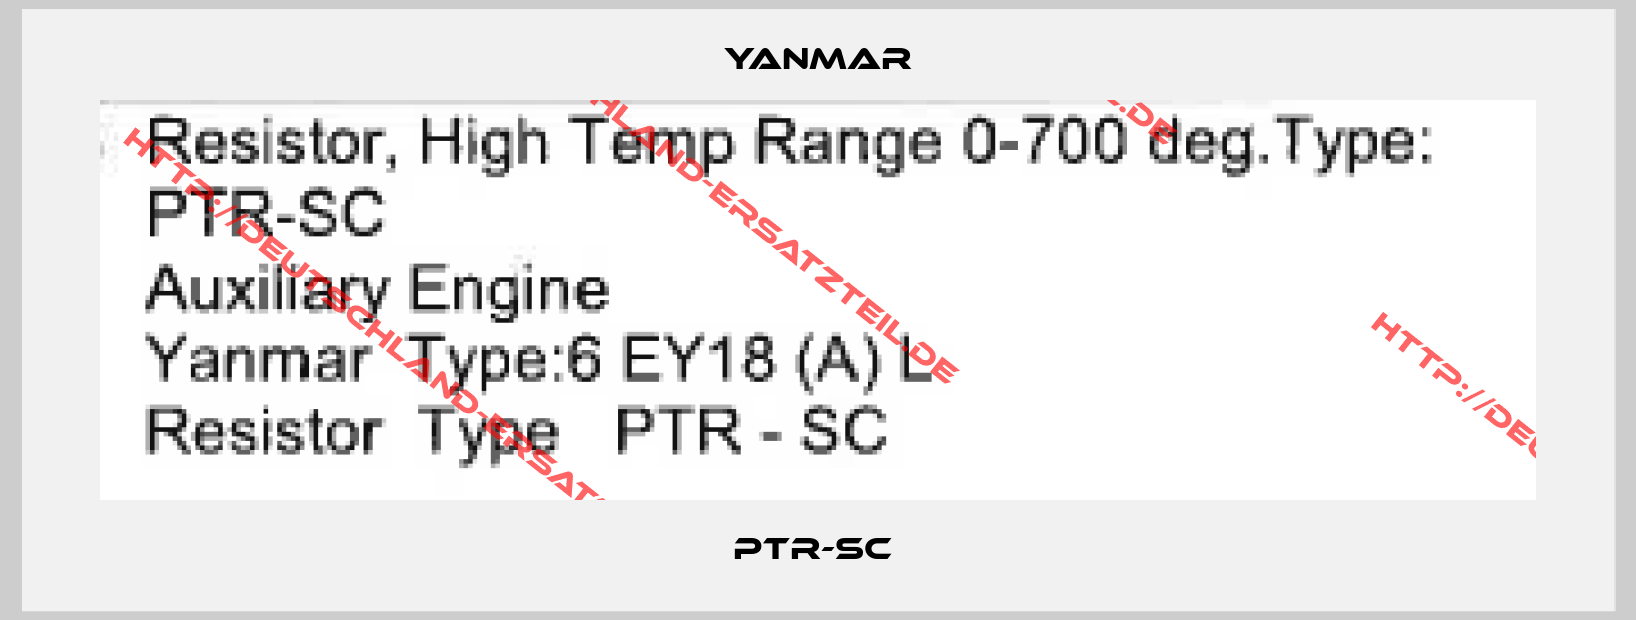 Yanmar-PTR-SC 